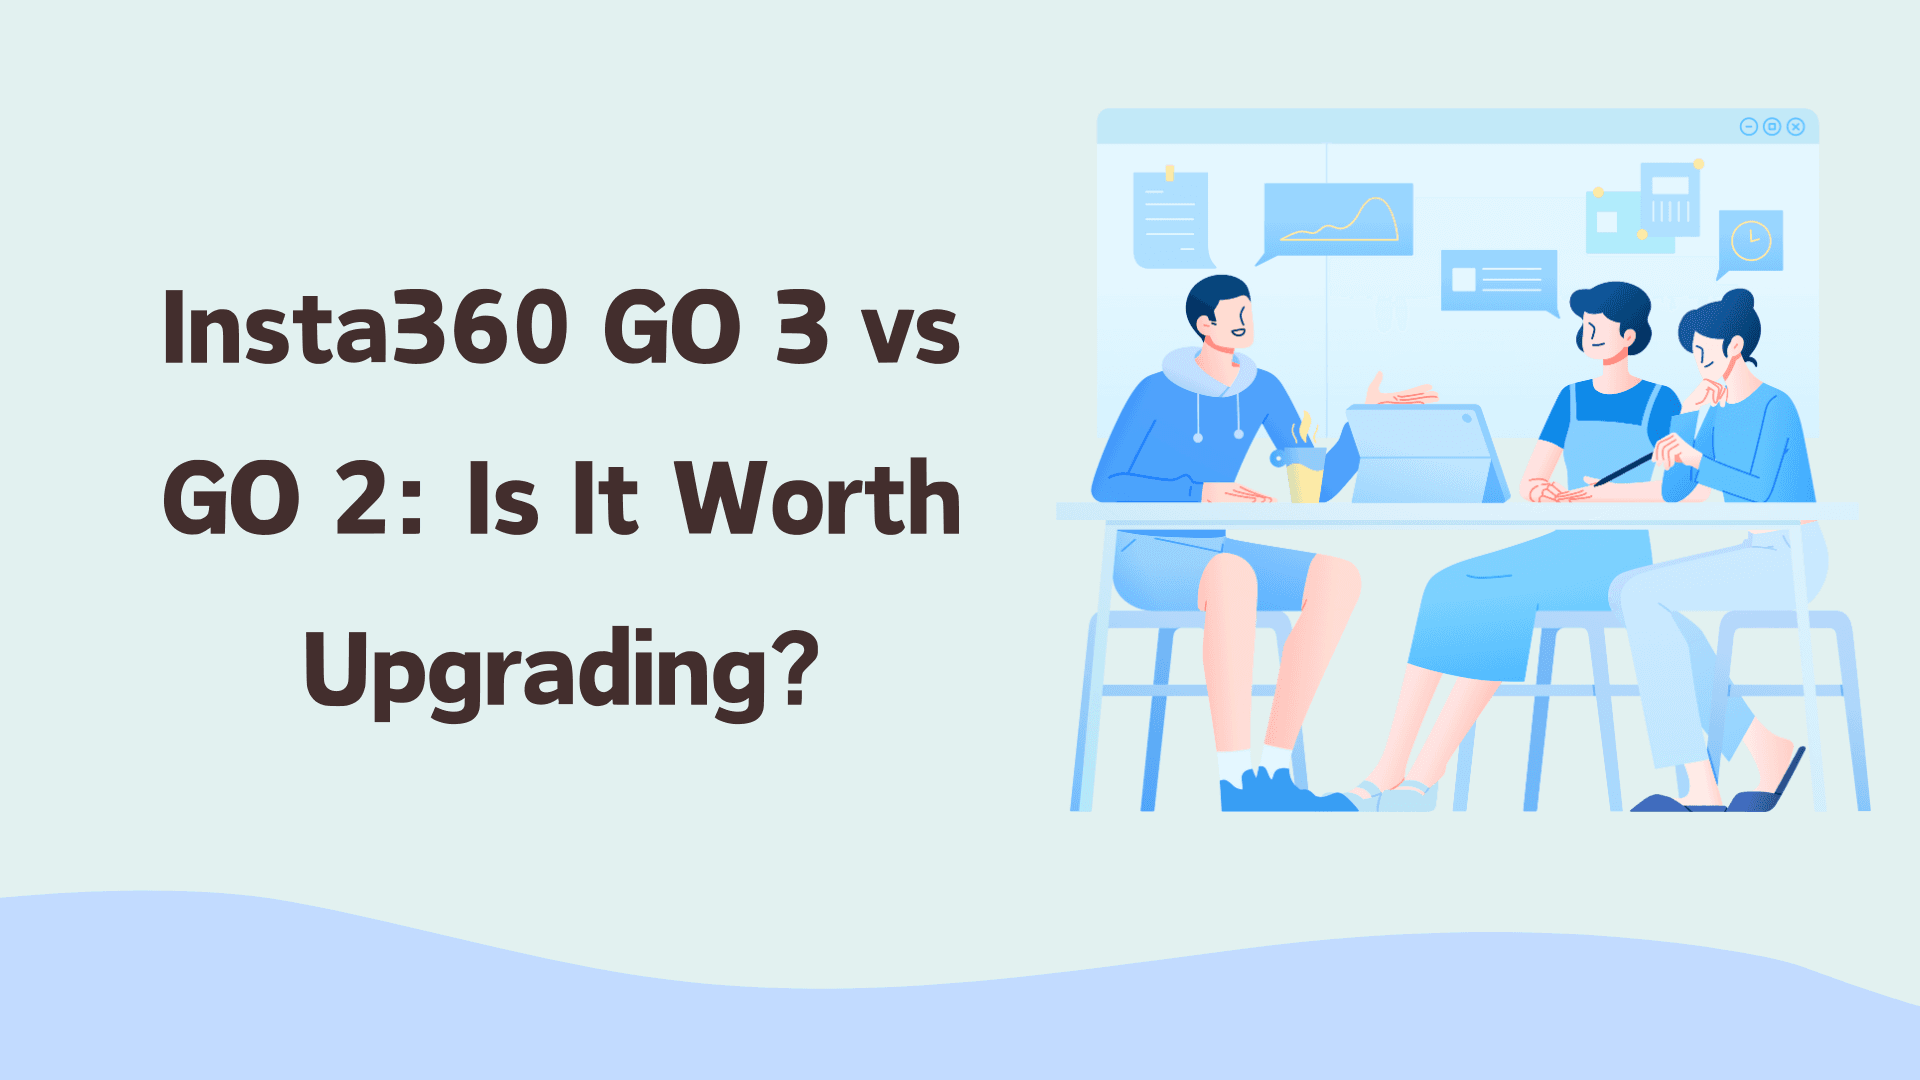 Insta360 GO 3 vs GO 2: Is It Worth Upgrading?